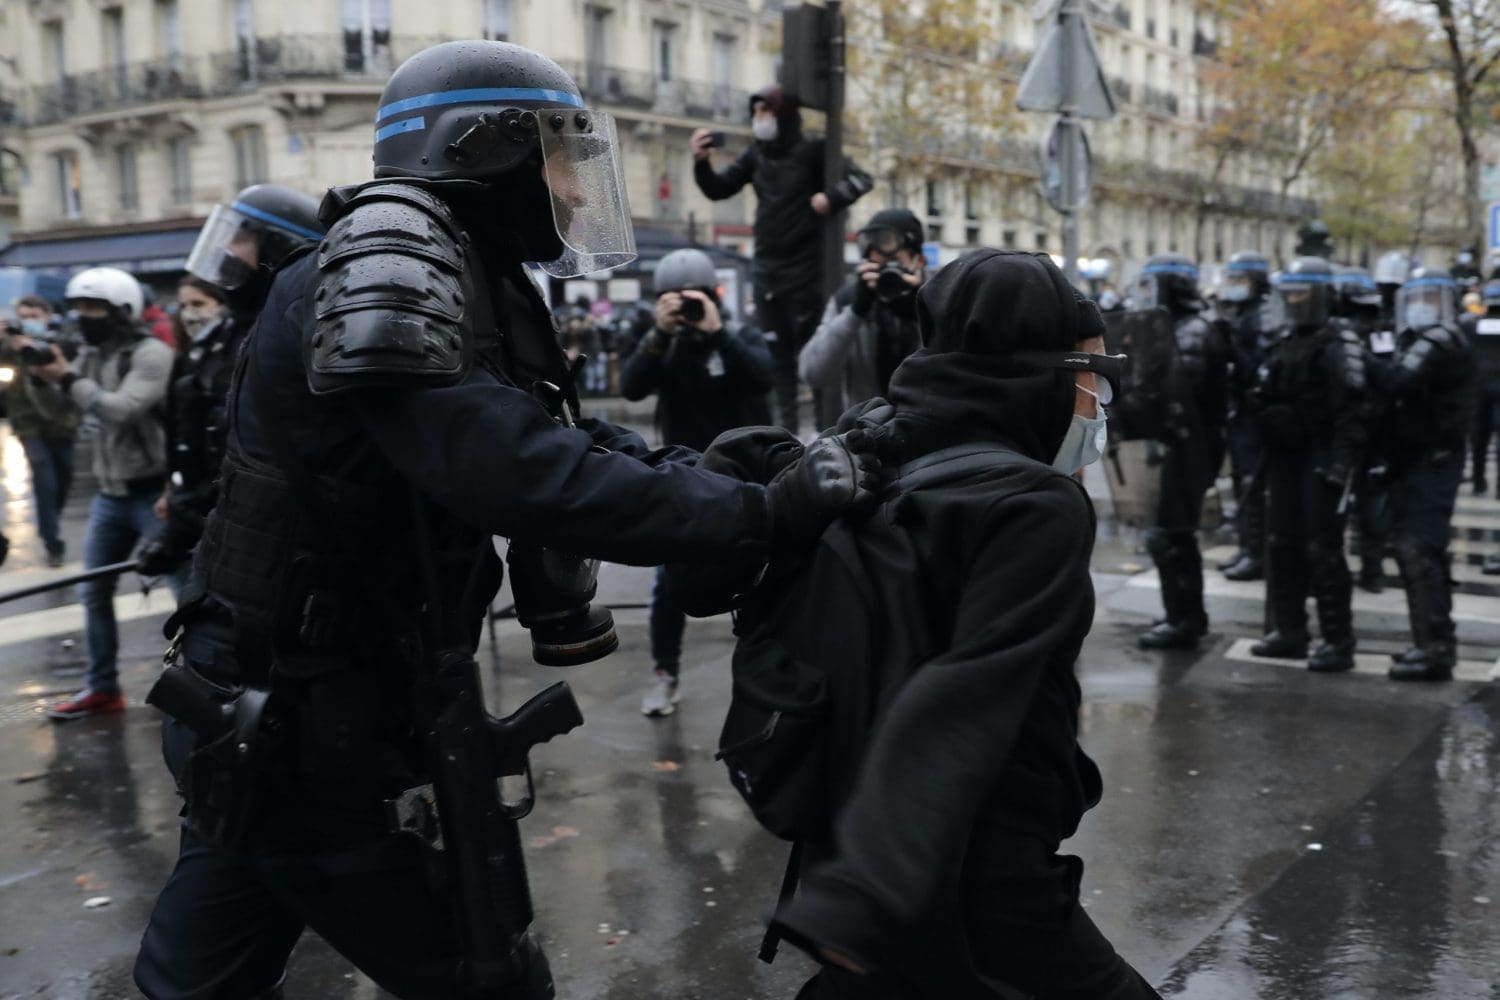 Riot police in Paris manhandling a protestor